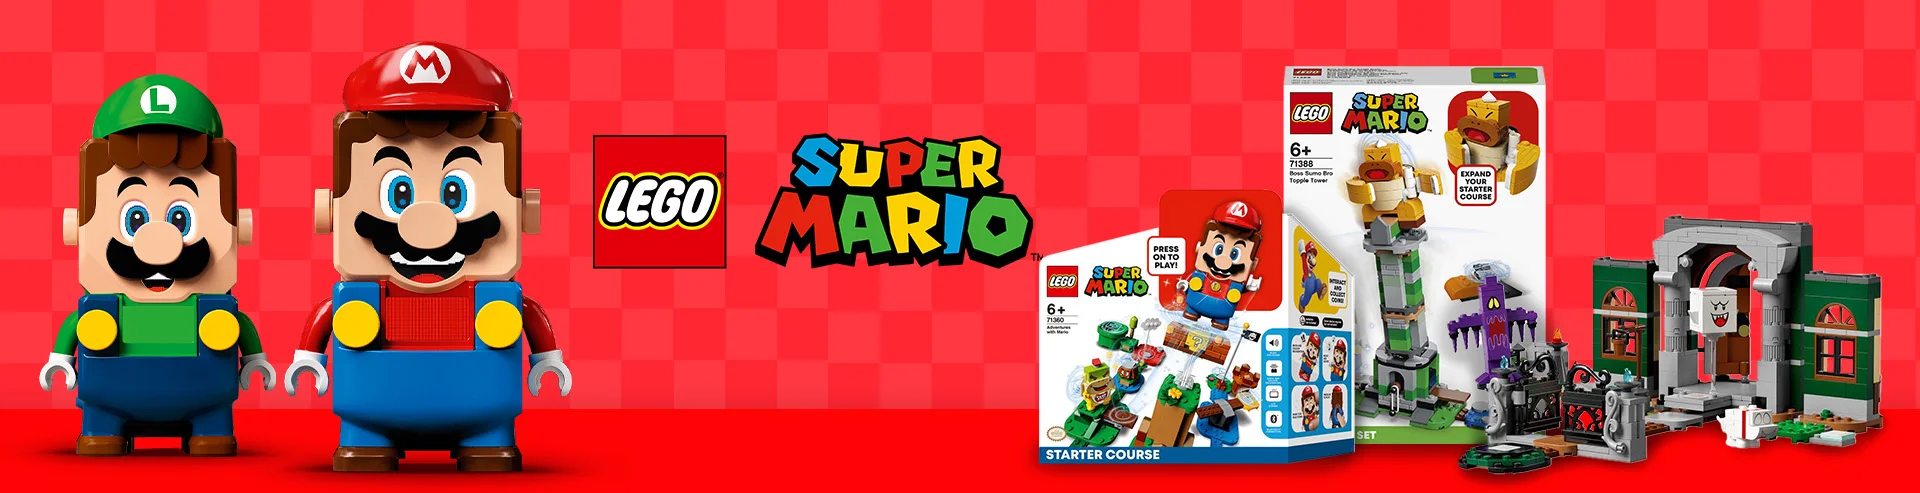 Full-Width-Large-LEGO-Super-Mario-Desktop (1).webp